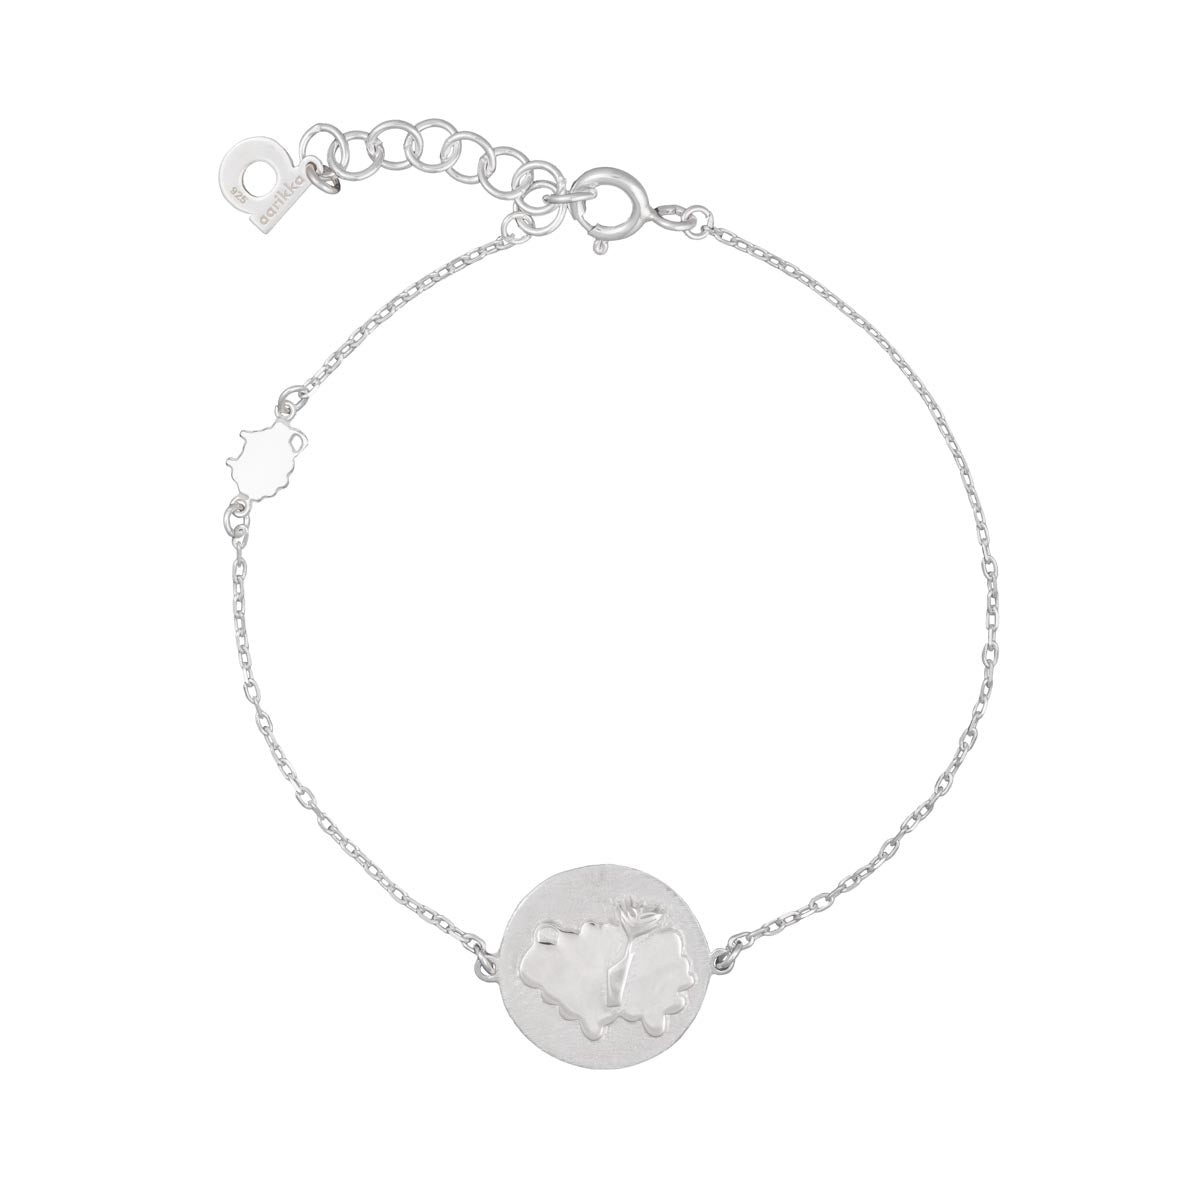 Sagittarius bracelet, silver